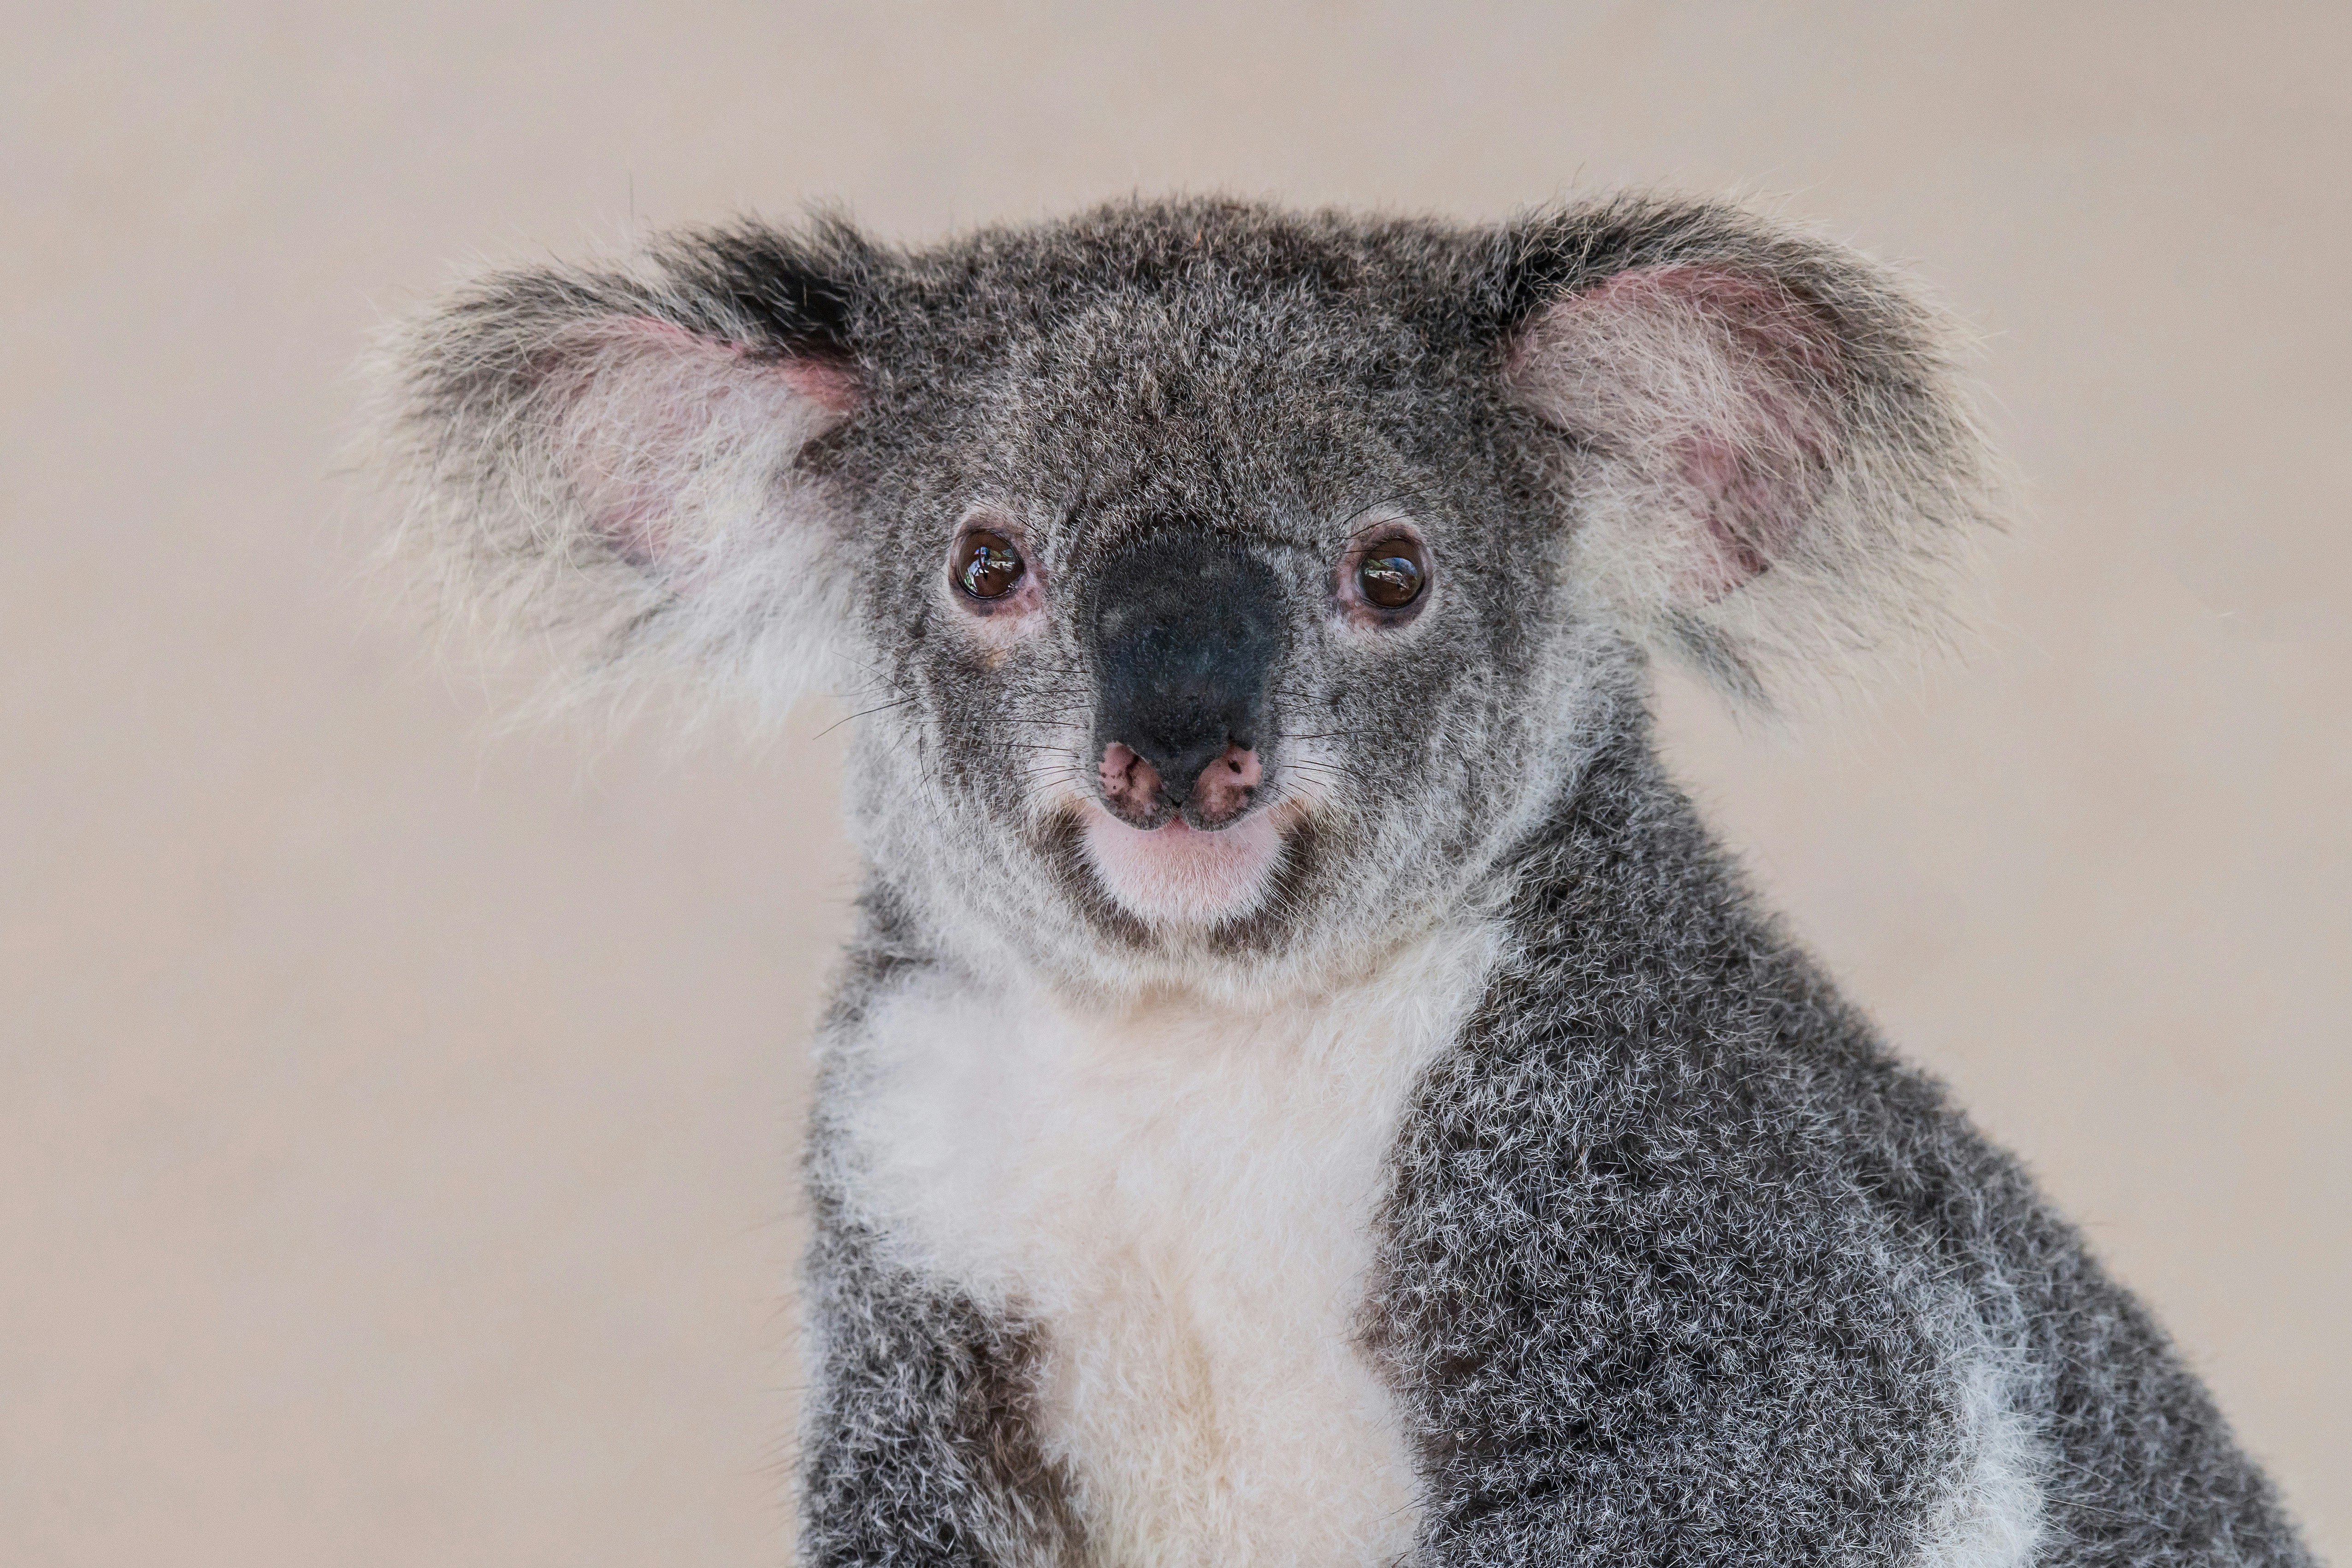 A cute young koala at Koala Gardens in Kuranda Australia. I think this photo is nice as a computer screen saver.